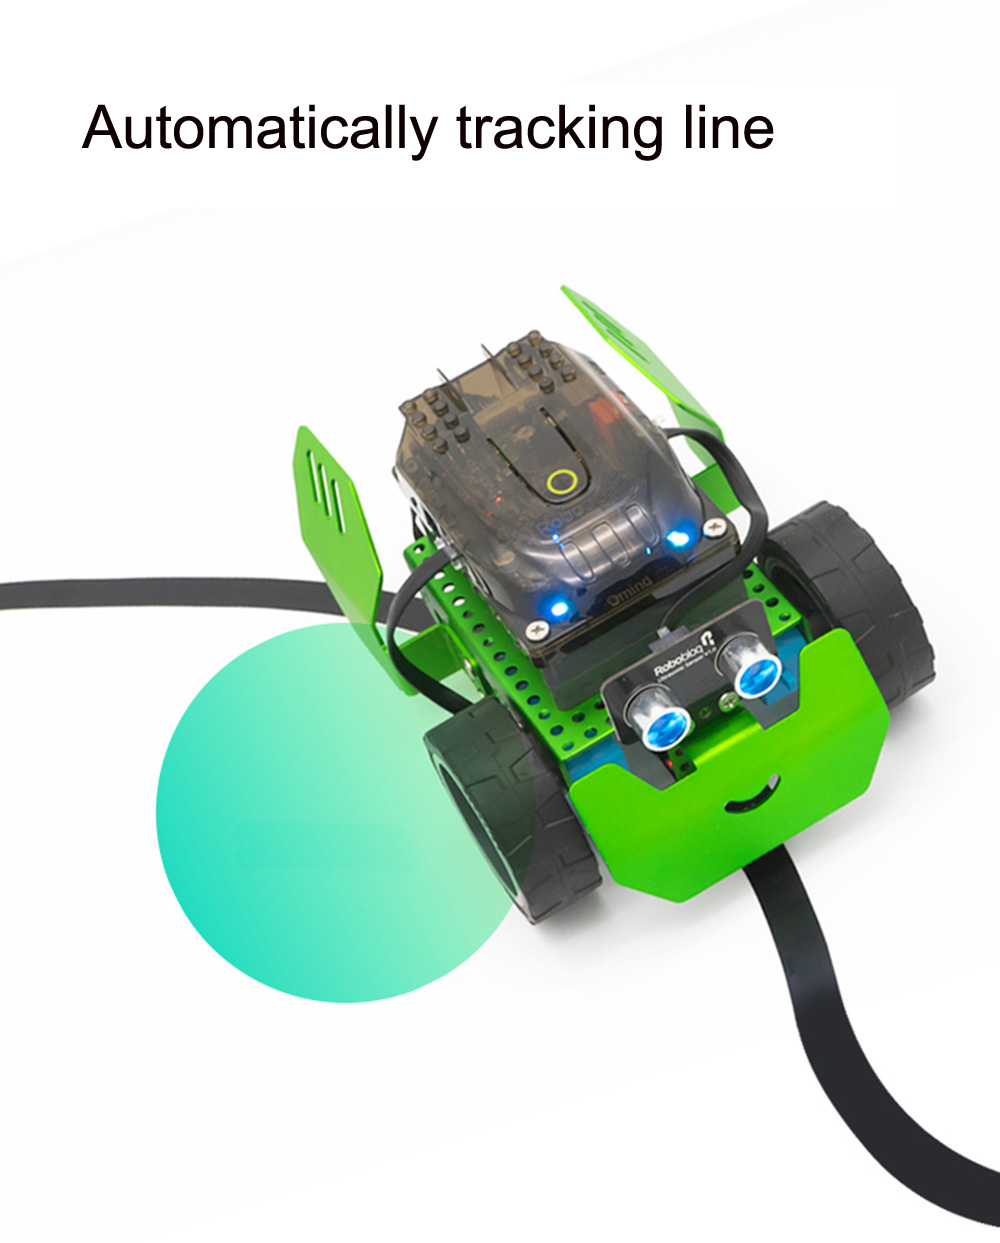 Robobloq-Q-Scout-DIY-Smart-RC-Robot-Car-Programmable-Tracking-APP-Control-Robot-Car-Kit-1438526-4